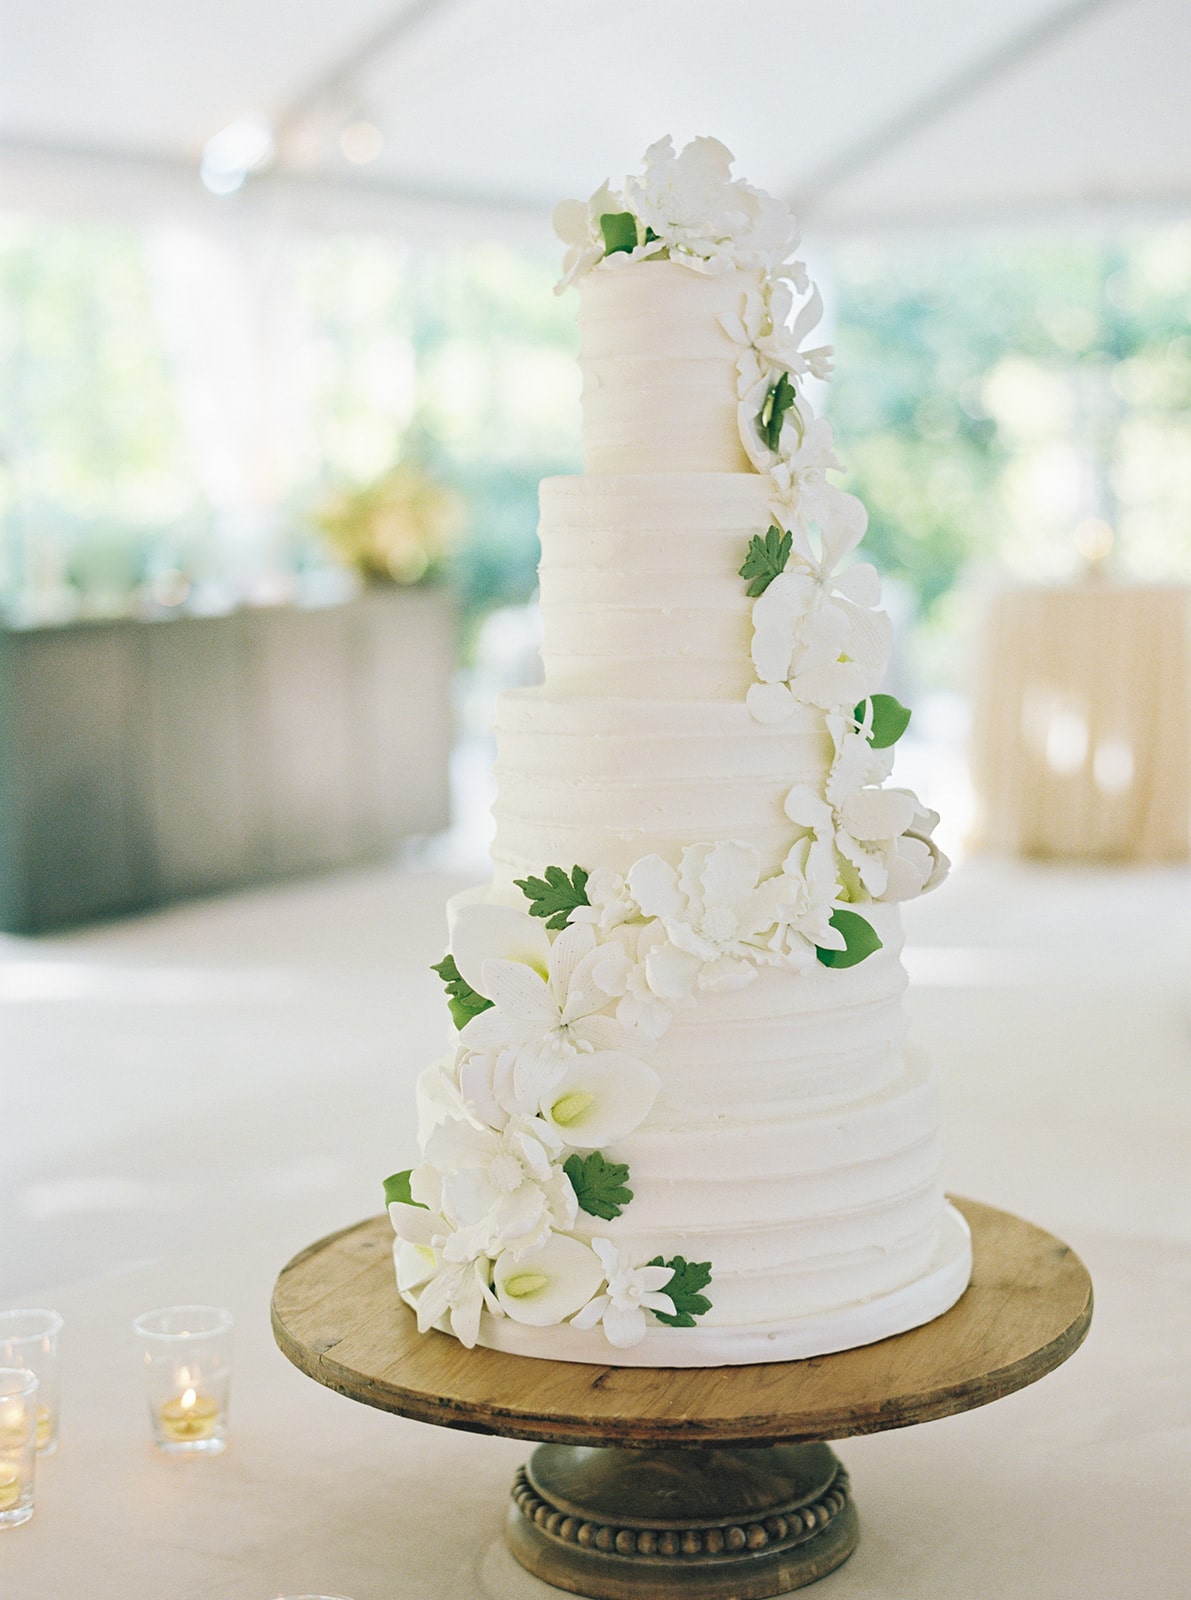 Four tiered butter cream wedding cake